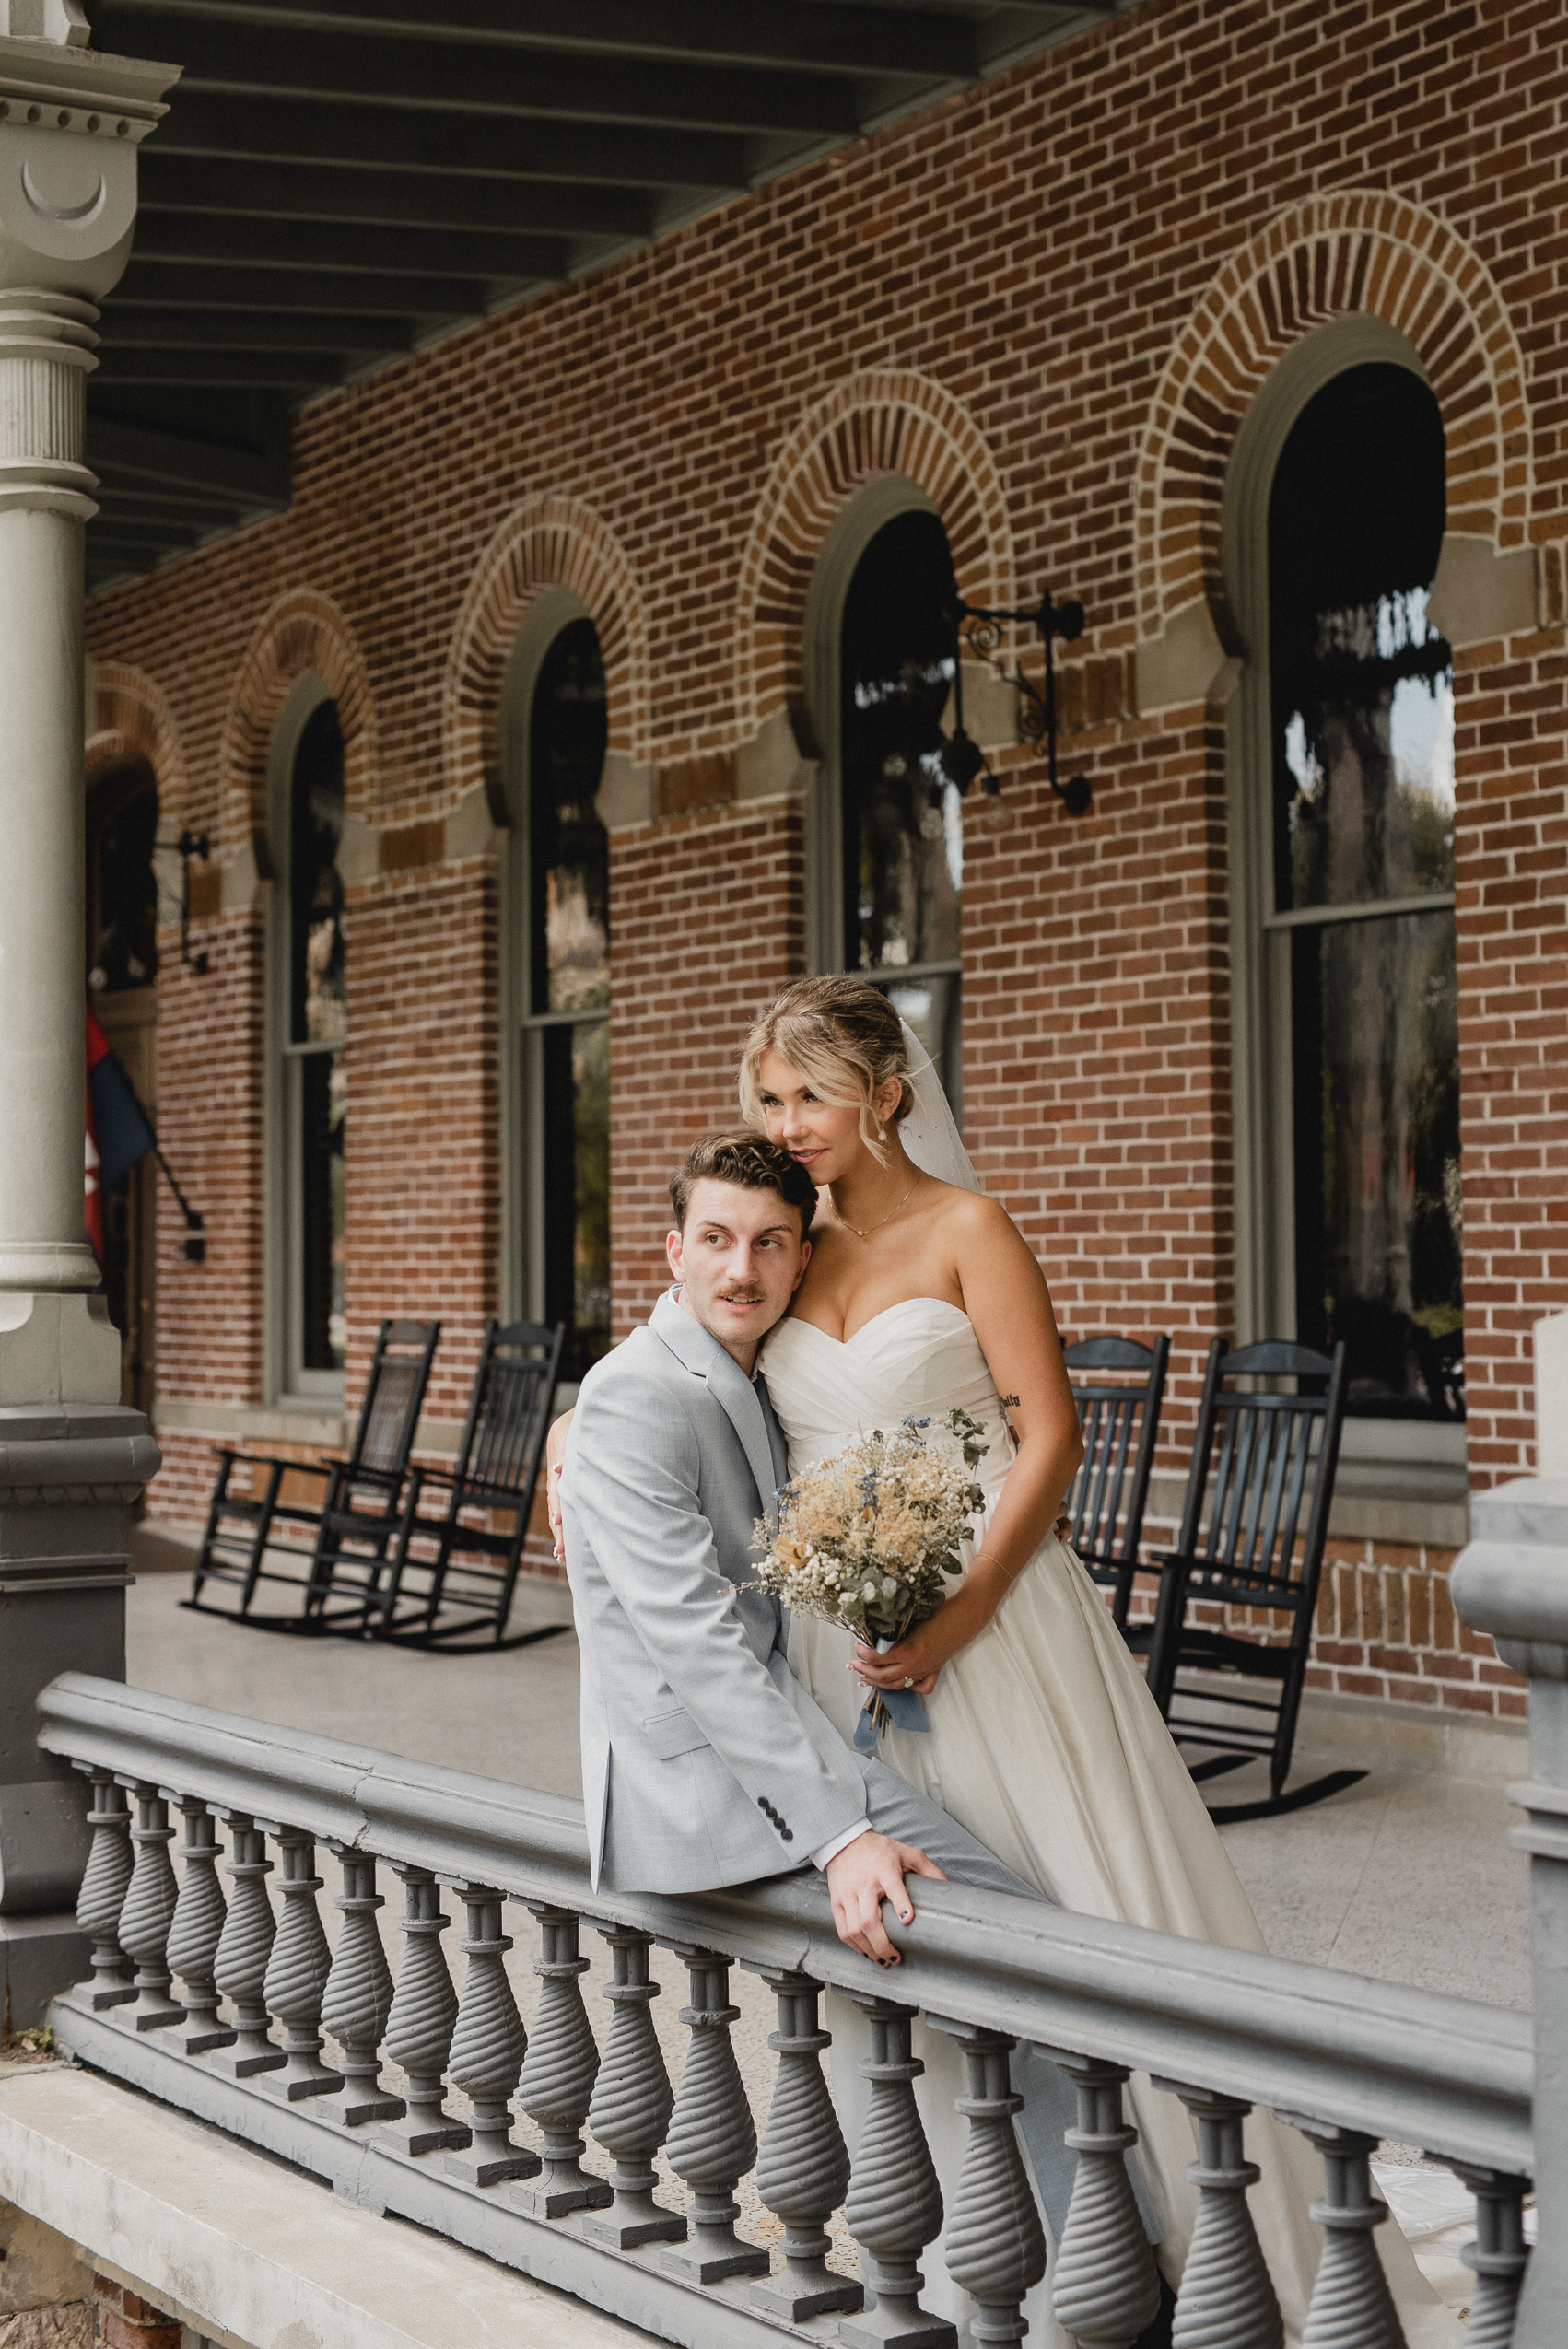 Orlando University of Tampa Central Florida Destination Elopement & Wedding Photographer